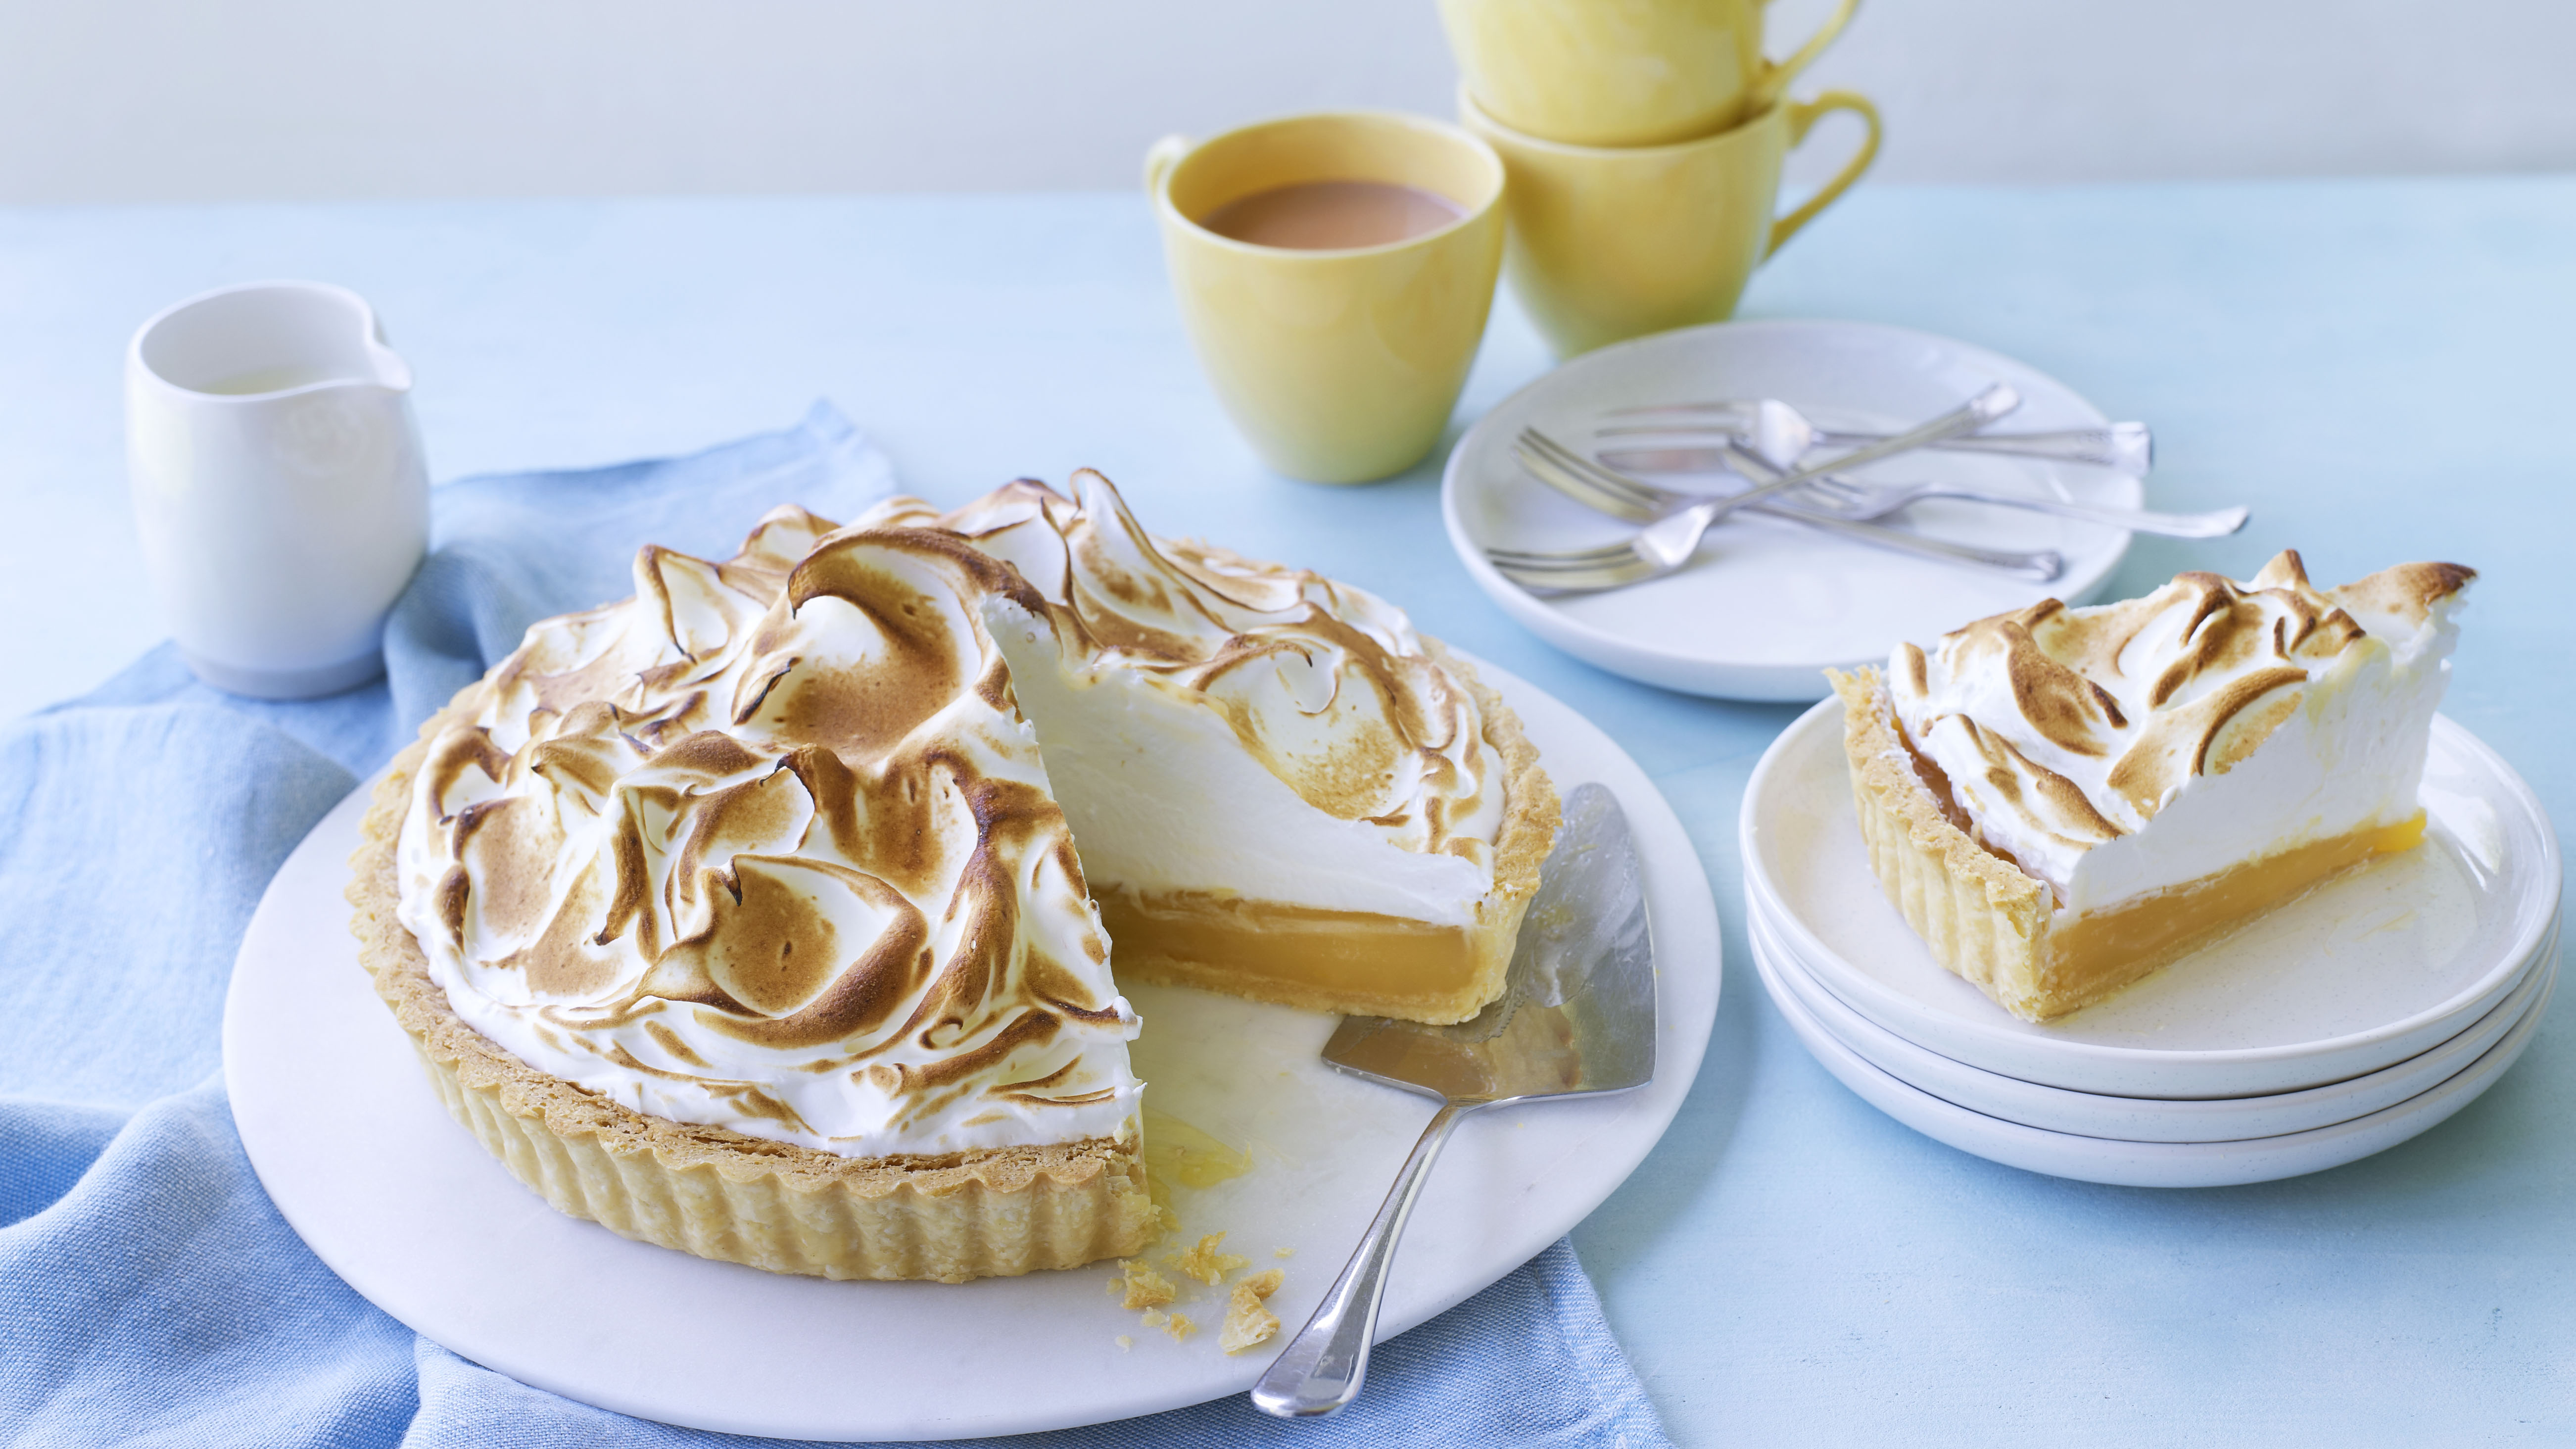 How to make lemon meringue pie recipe - BBC Food